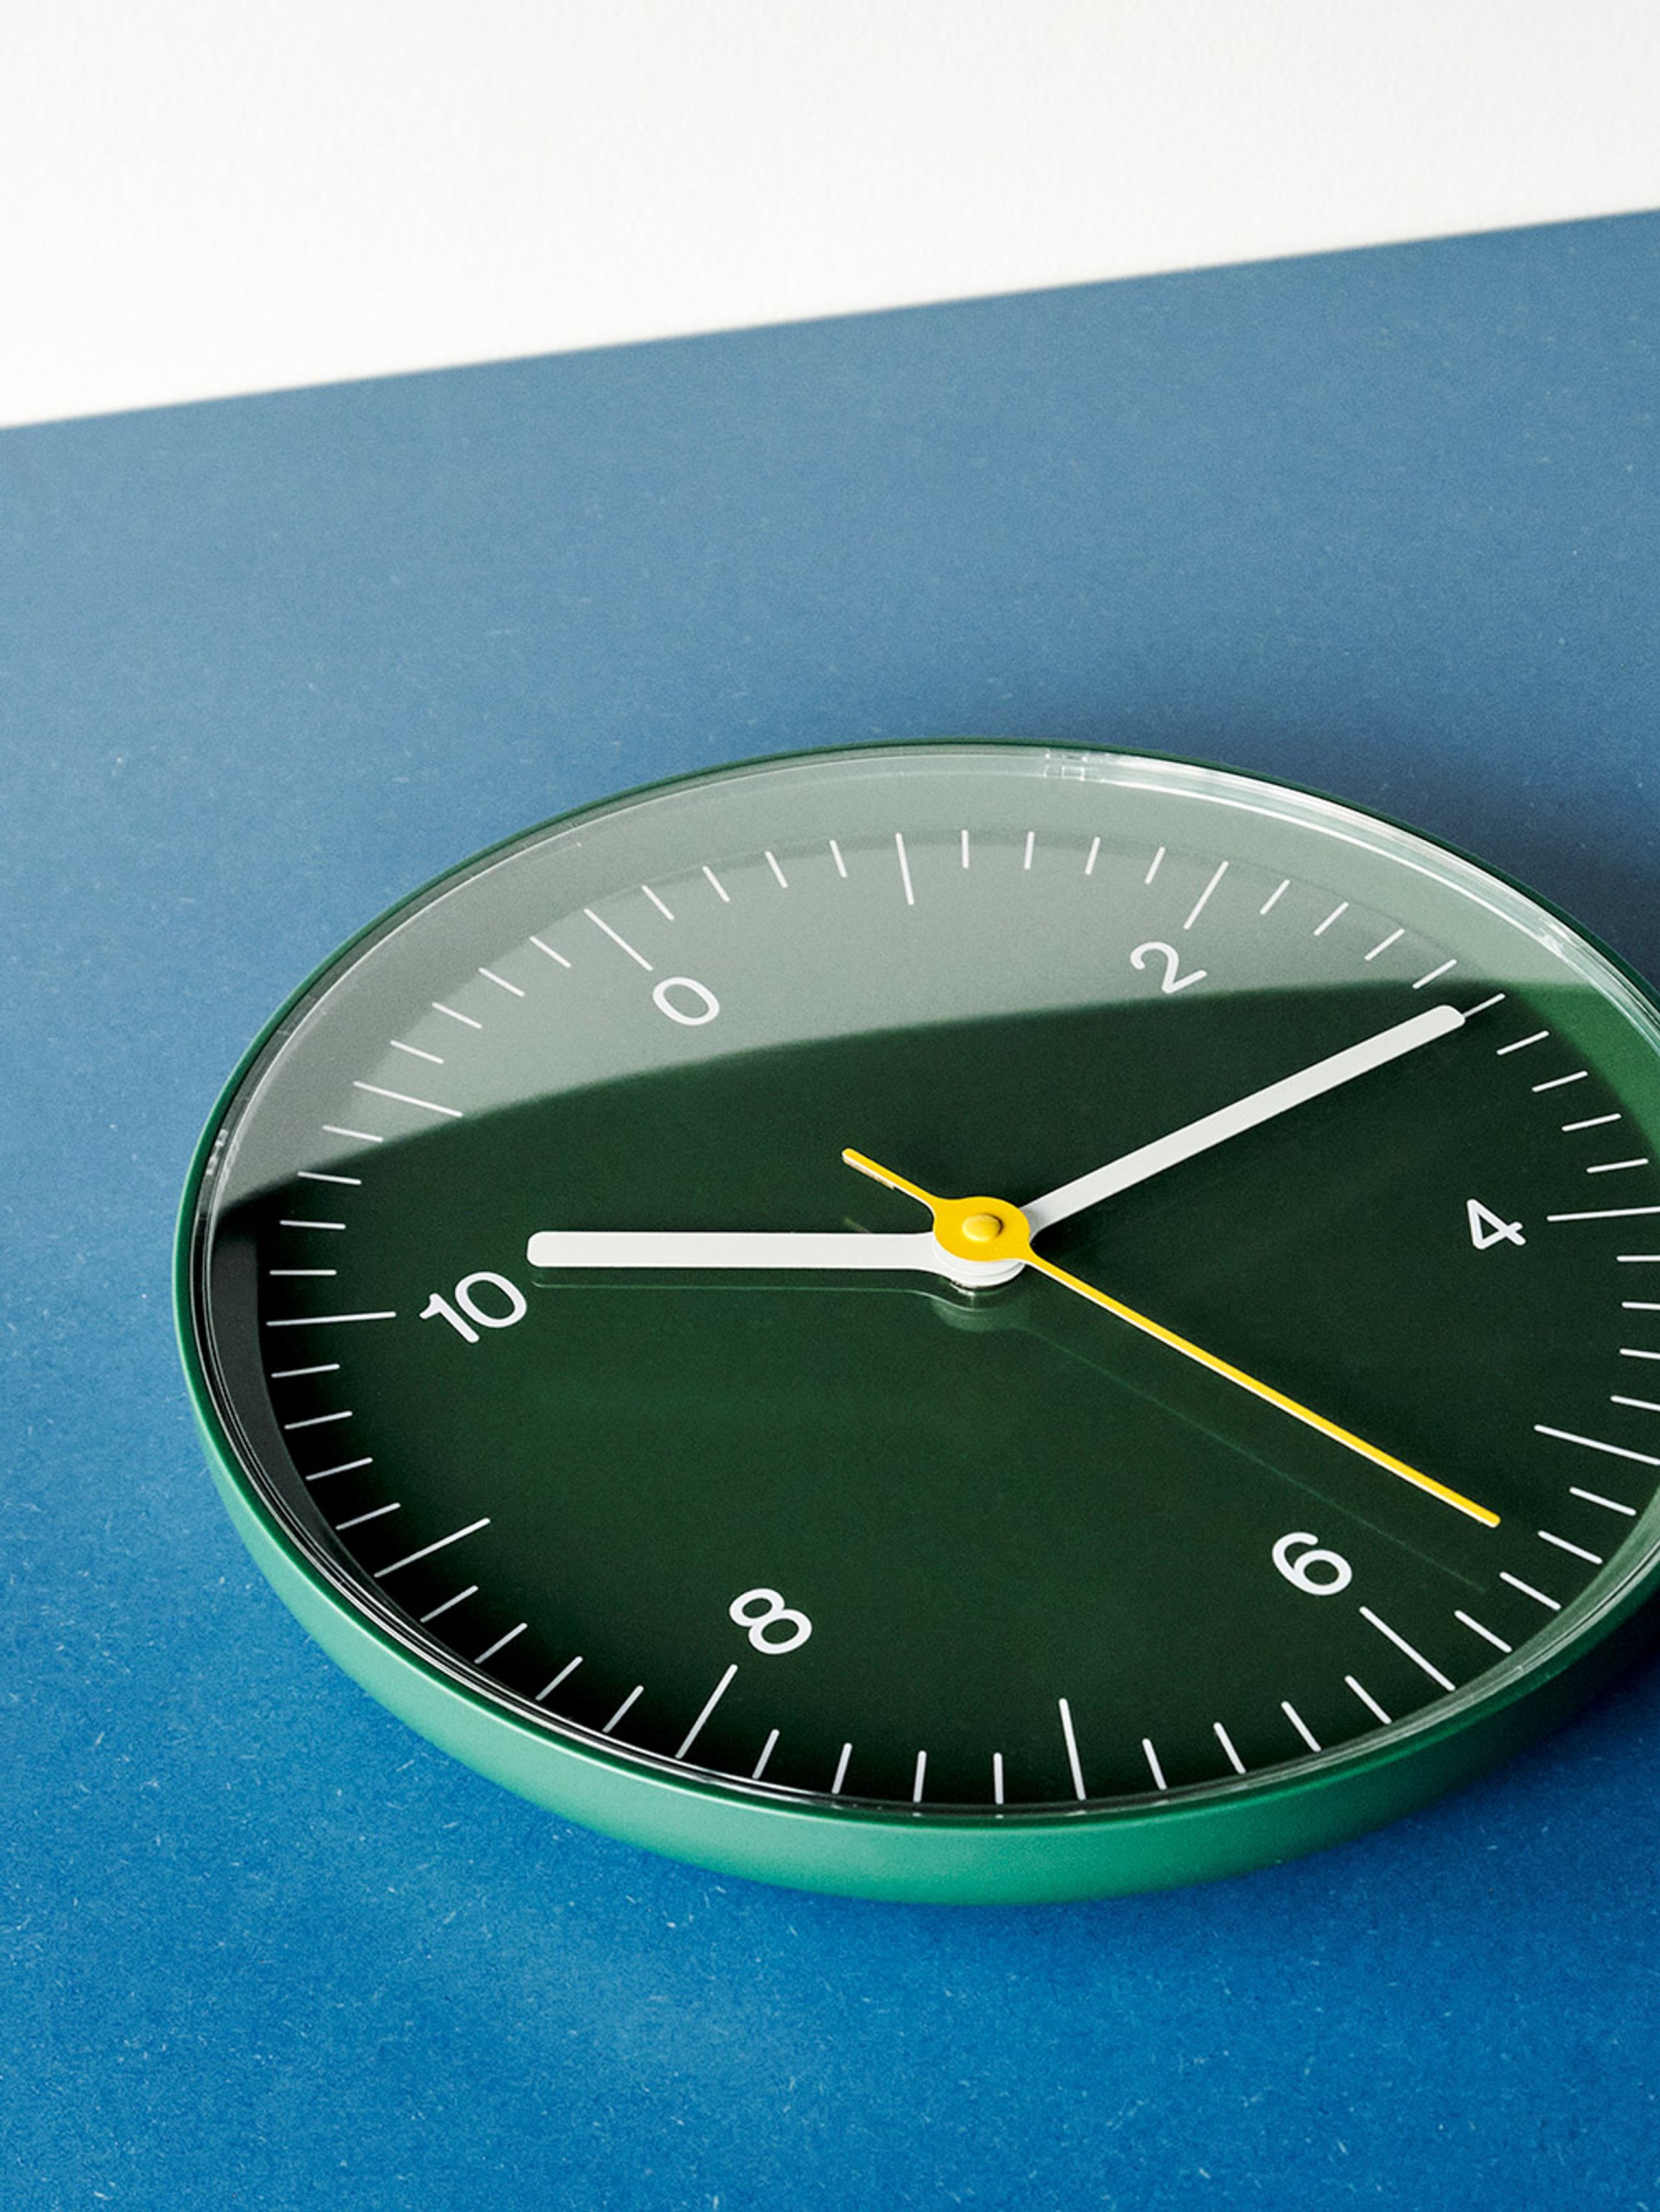 HAY - Horloge - Wall Clock - Green